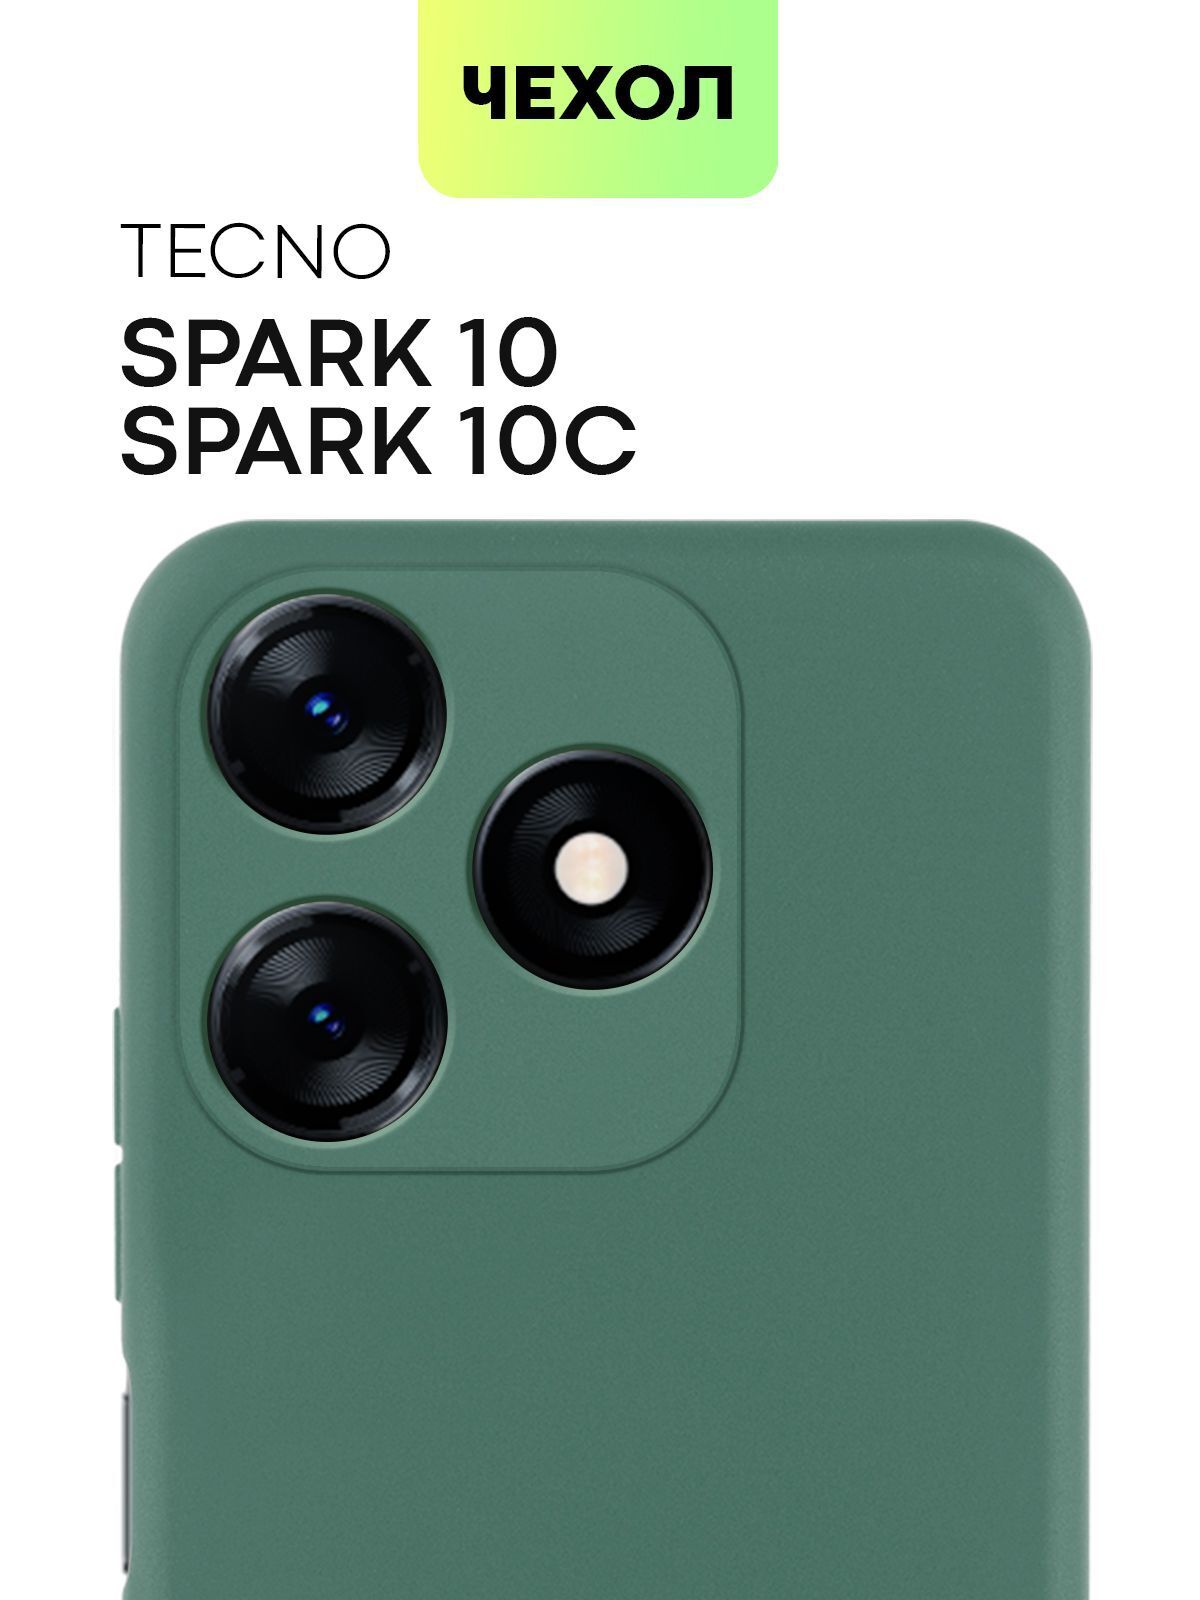 Телефон спарк 10 отзывы. Techno Spark 10. Чехол для телефона Techno Spark 10. Tecno Spark 10 чехол арт. Техно Spark 10c зеленый.